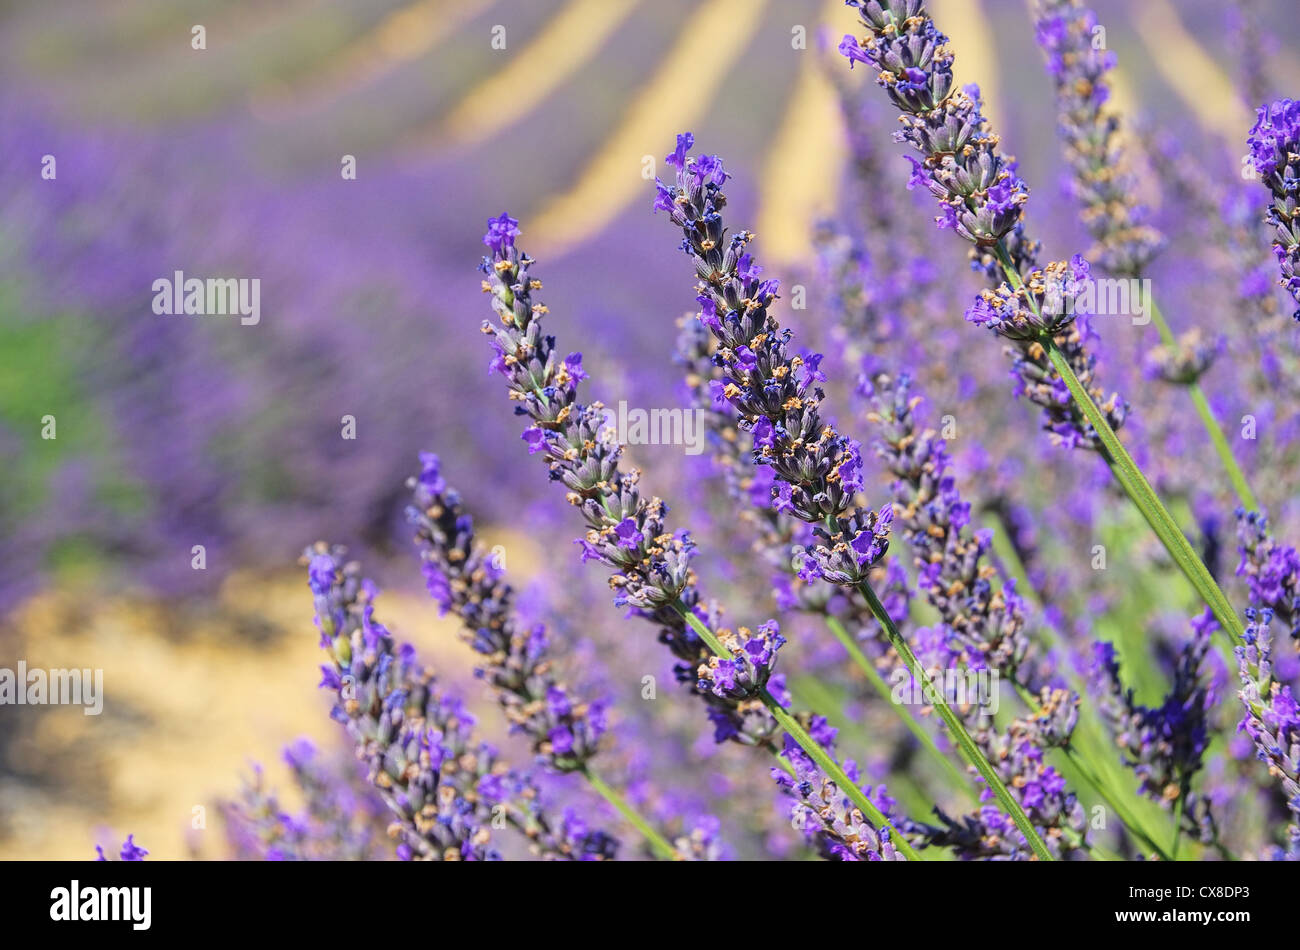 Lavendelfeld - lavender field 07 Stock Photo